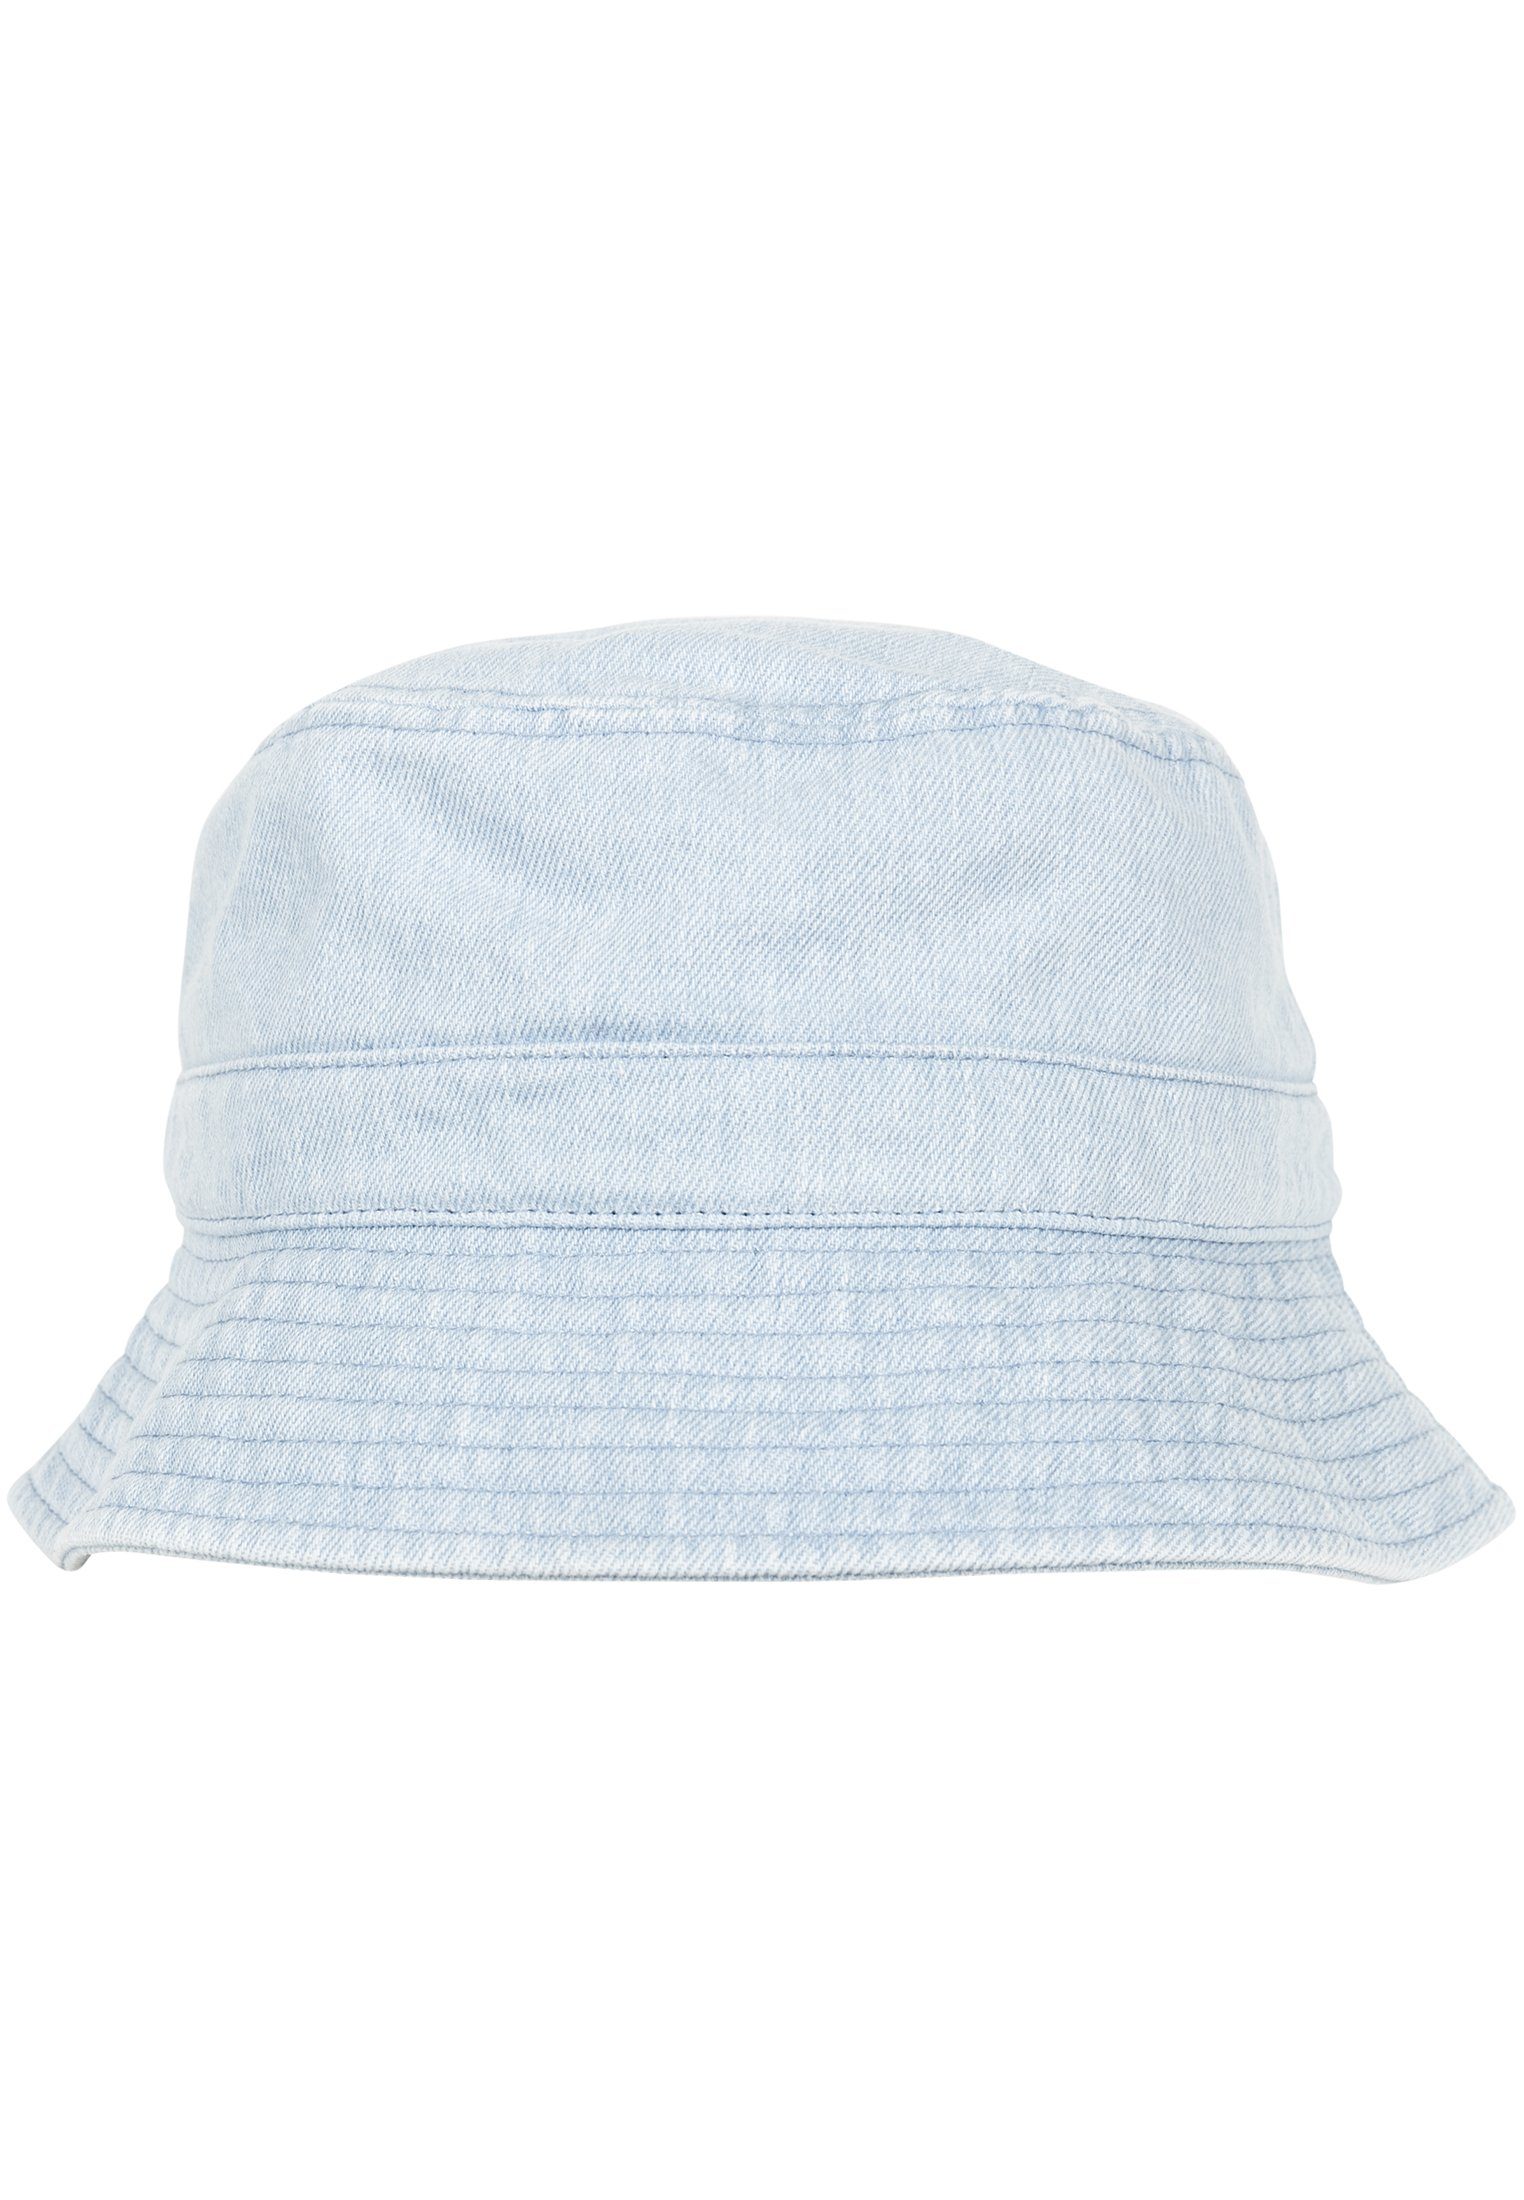 Cap Hat Flexfit light blue Flex Hat Denim Bucket Bucket